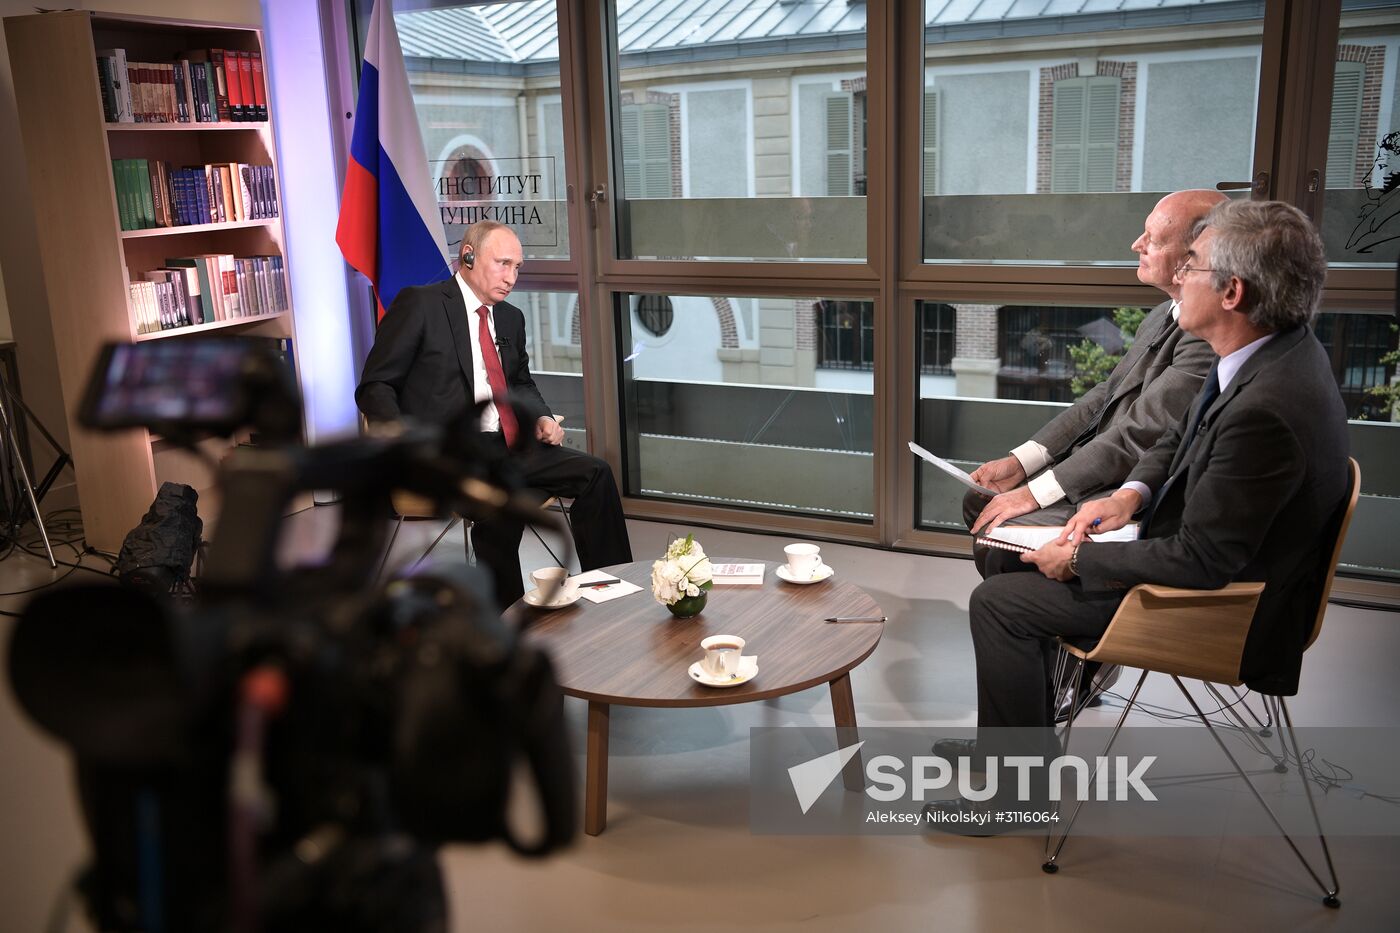 President Vladimir Putin interviewed by Le Figaro